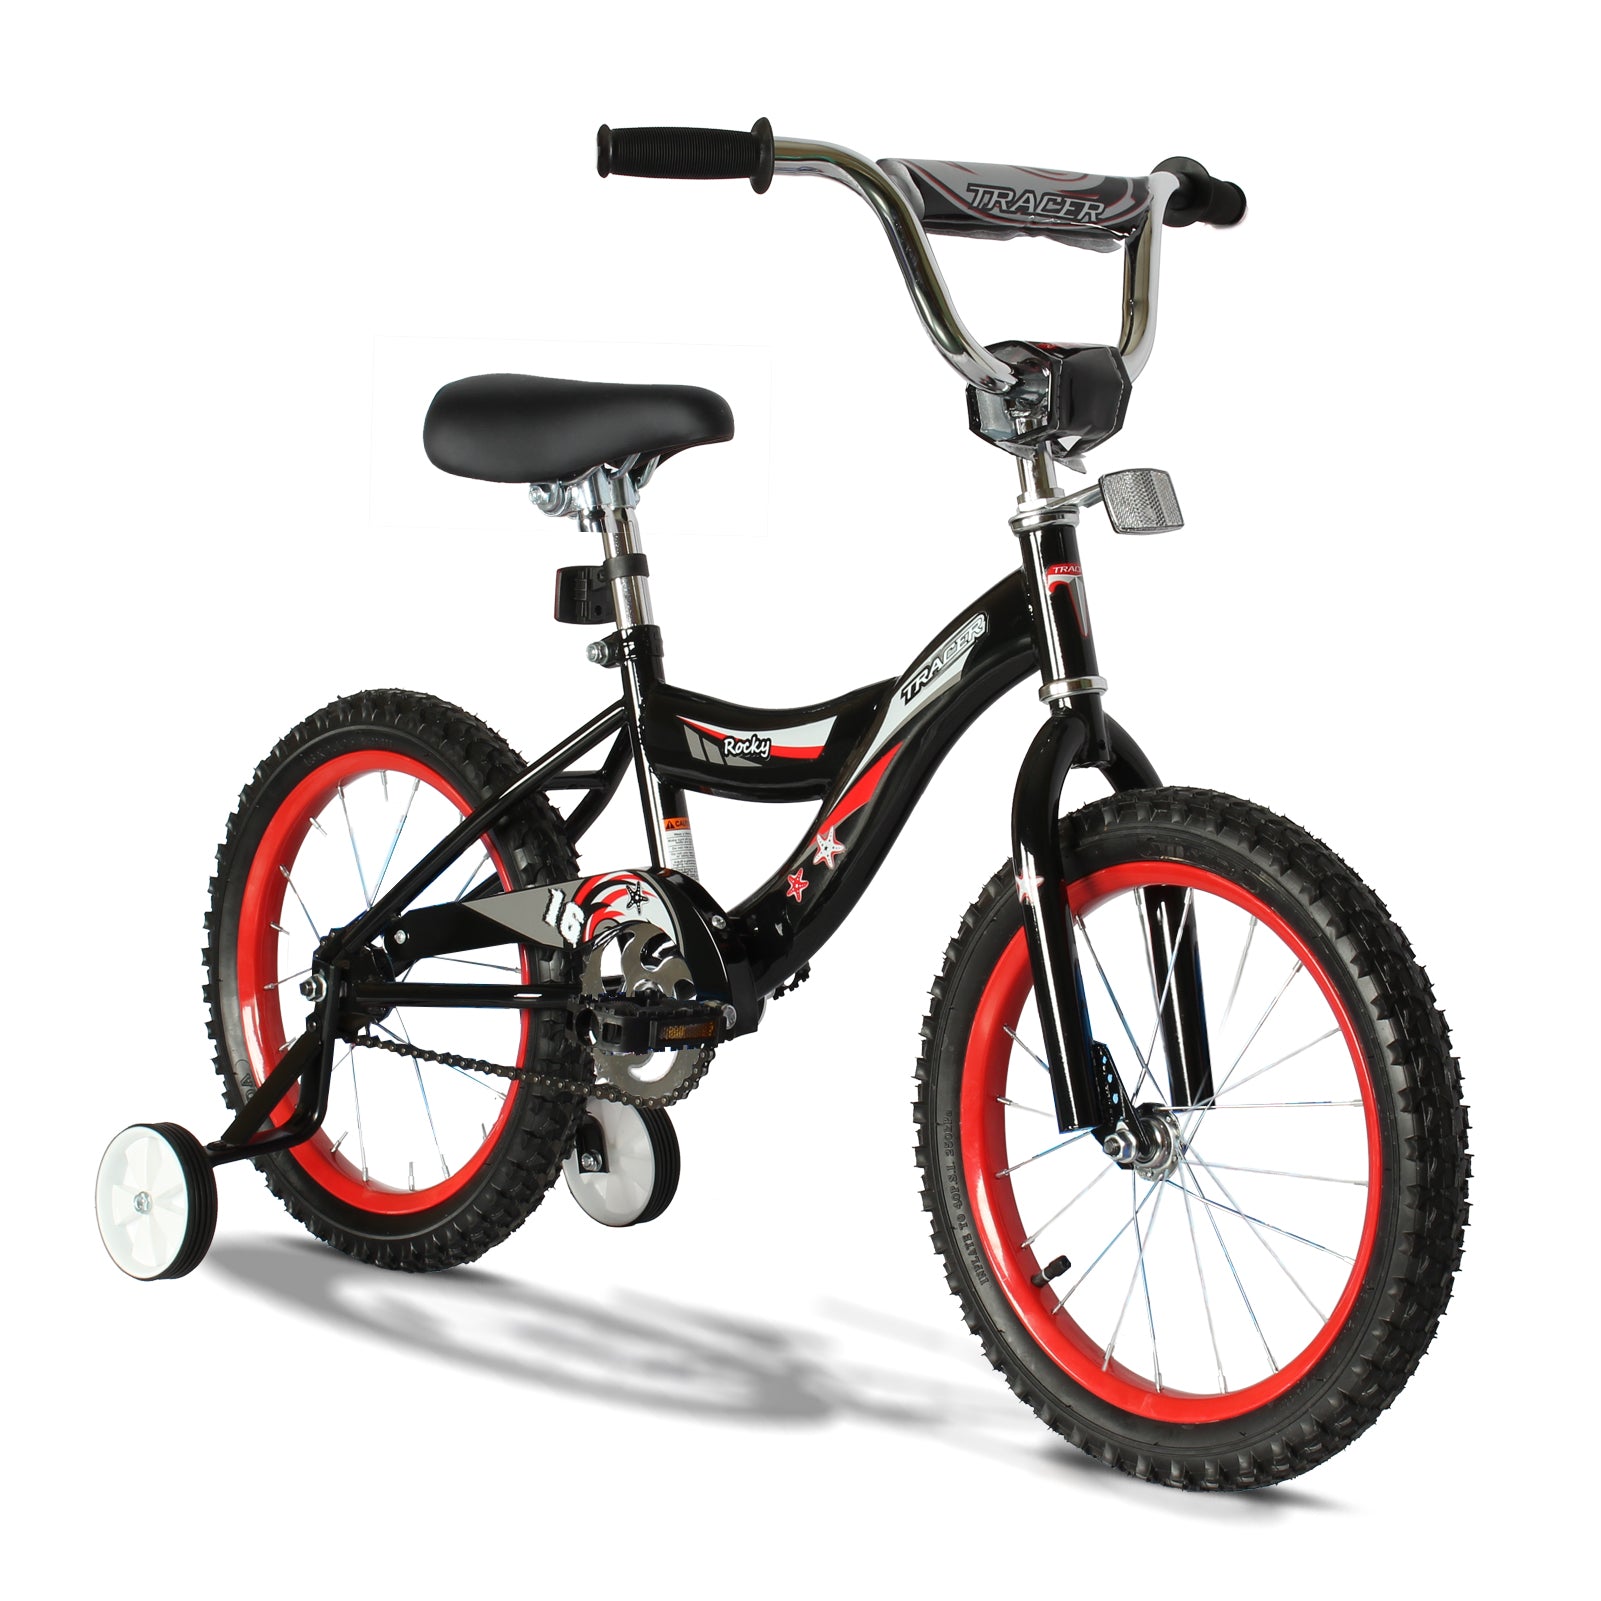 Tracer Rocky 16-inch Kids Bike with Training Wheels.